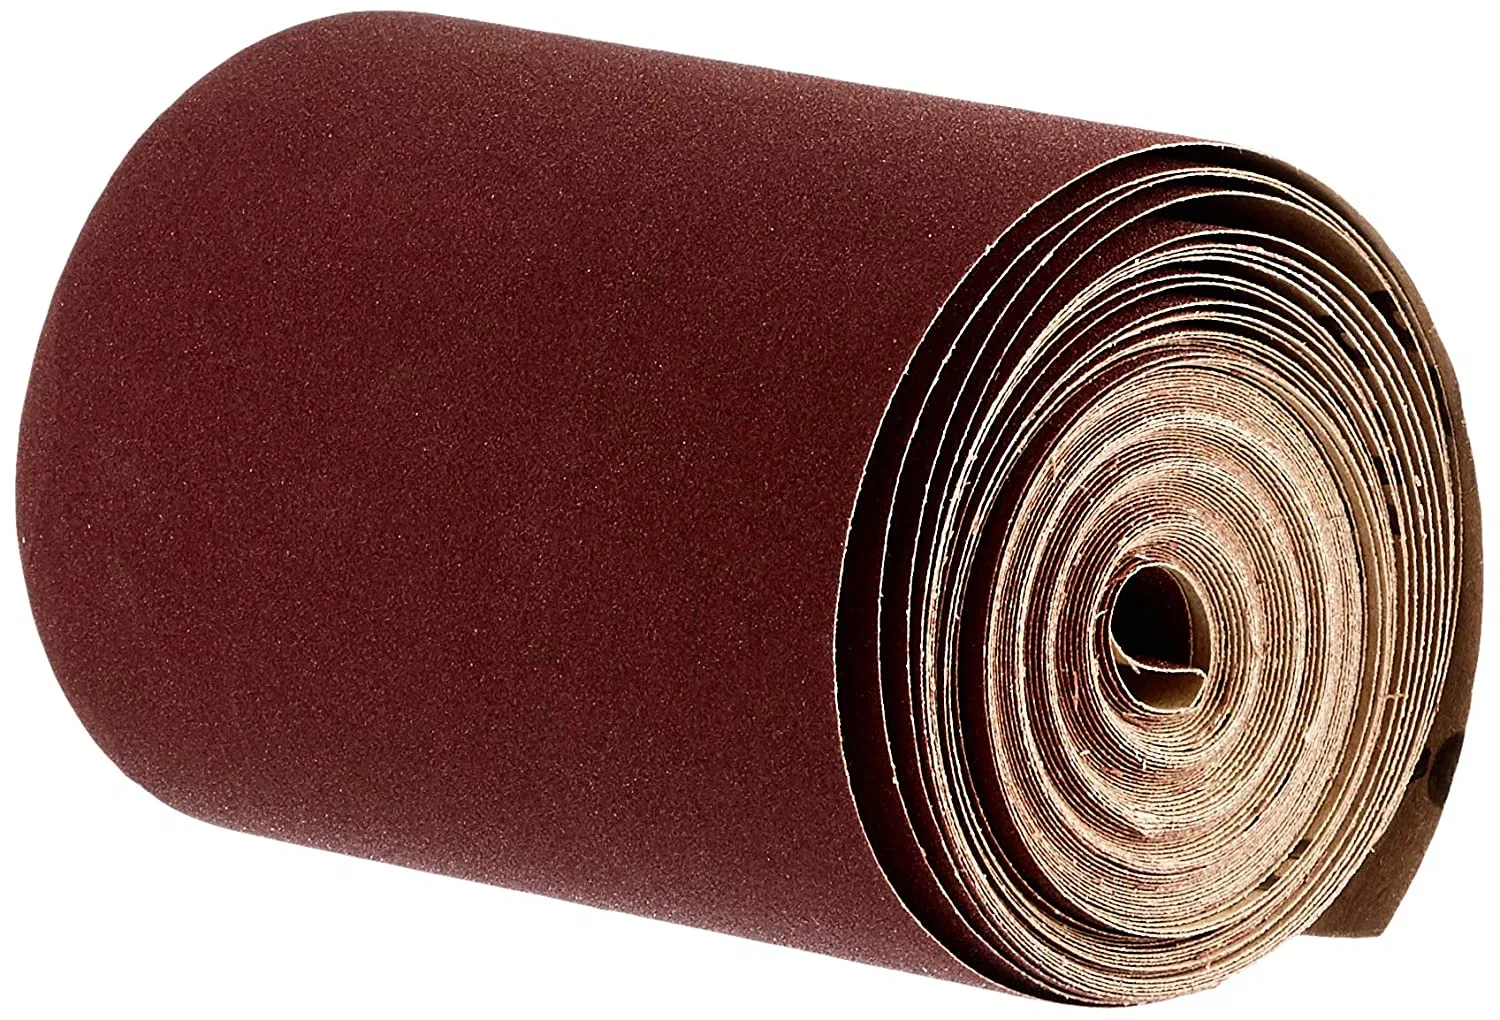 Factory Coated Abrasive Jumbo Roll Aluminium Oxide Abrasive Cloth for Metal